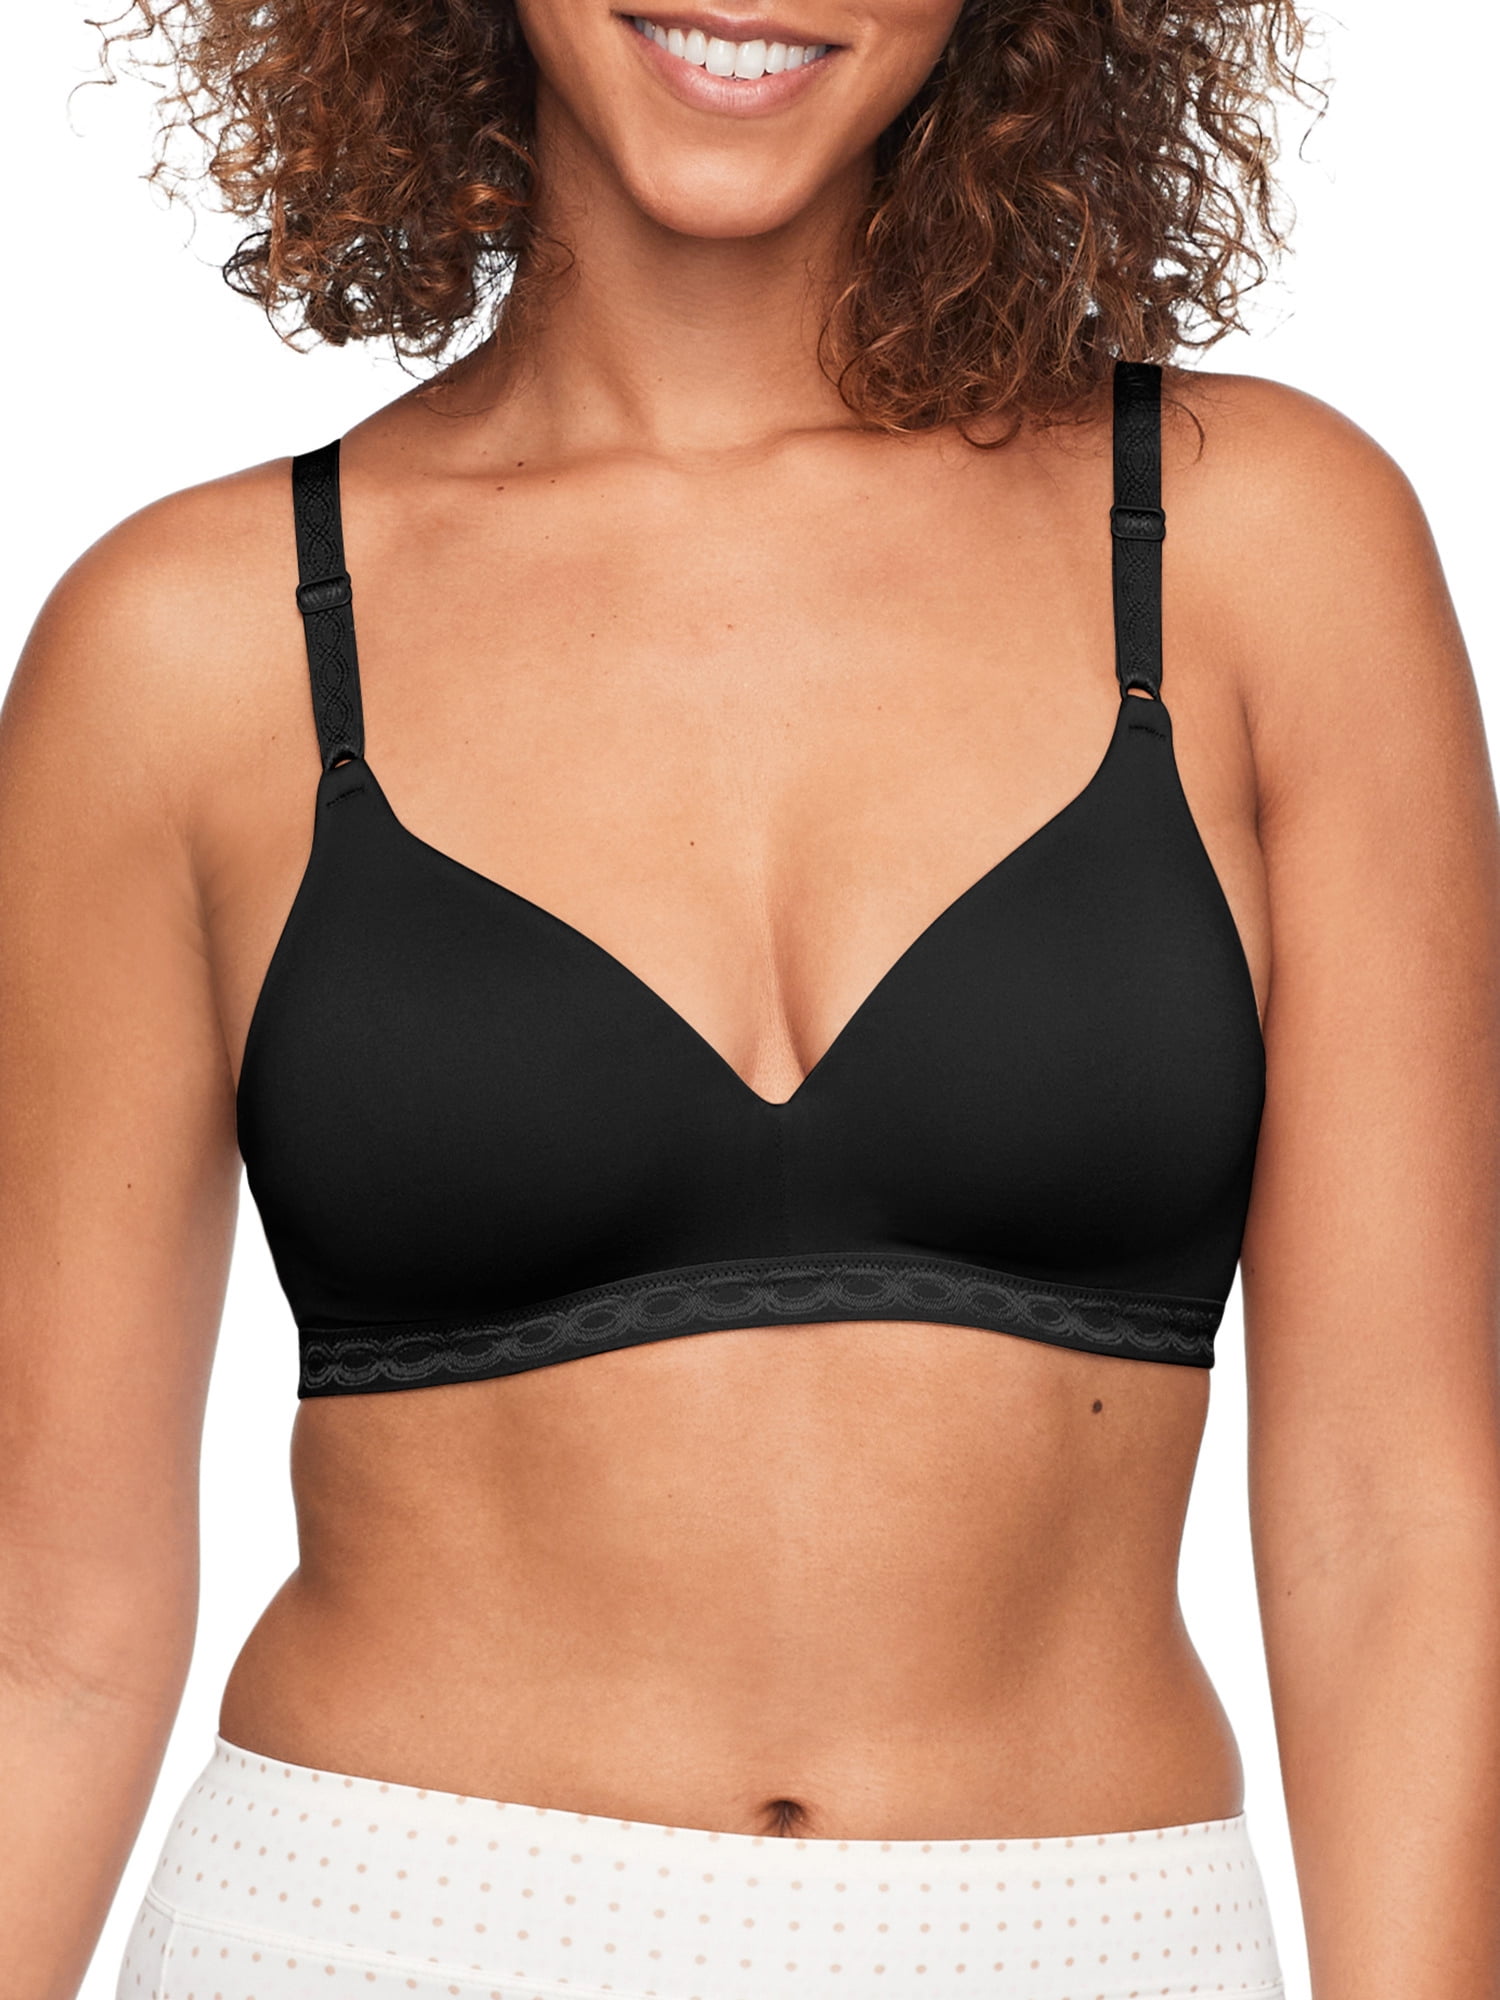 WARNERS bra Size undefined - $21 - From Lonette